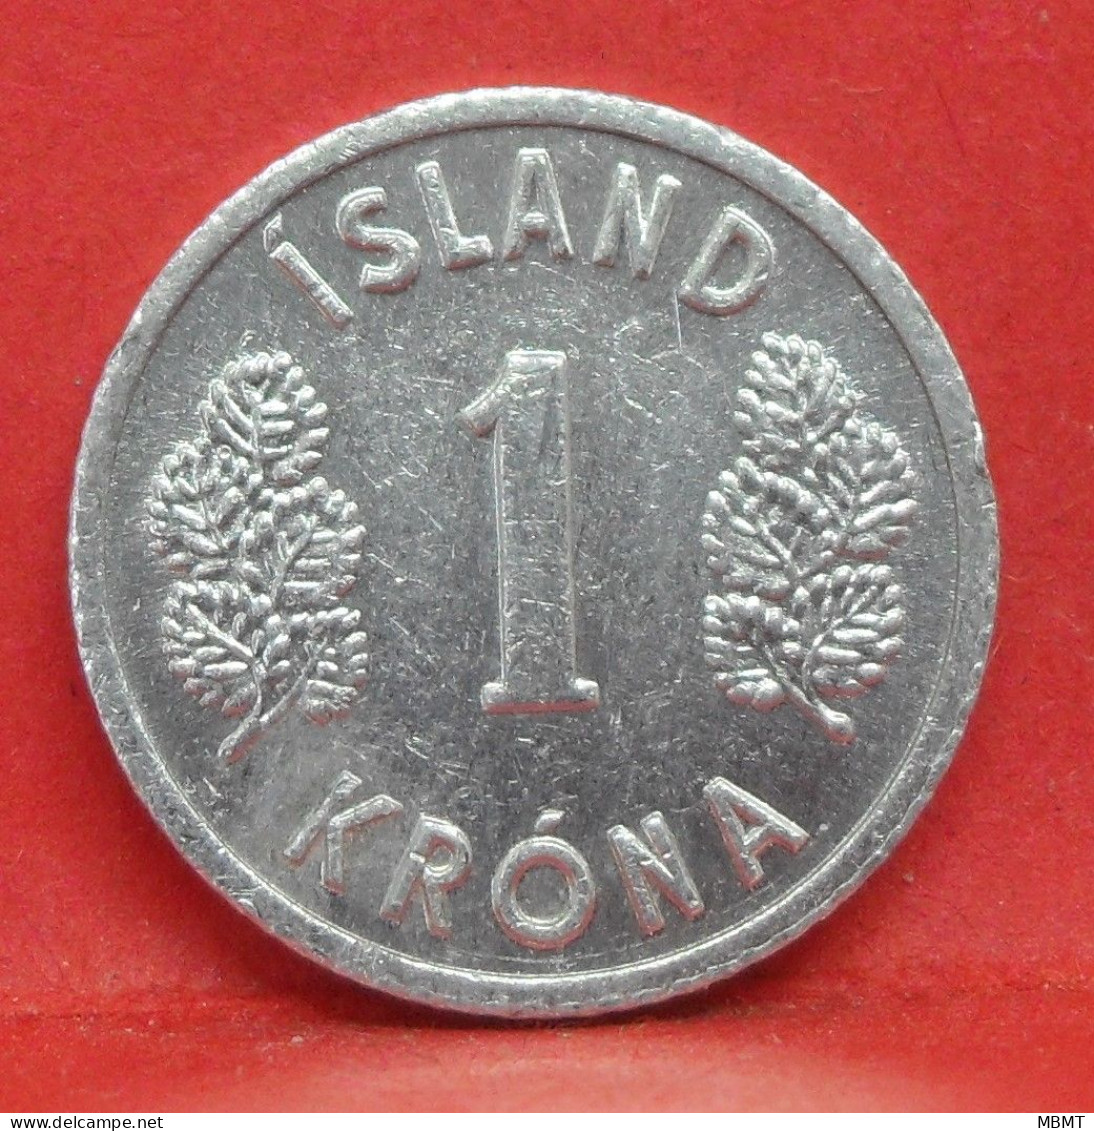 1 Krona 1978 - TTB - Pièce De Monnaie Islande - Article N°3295 - Islande